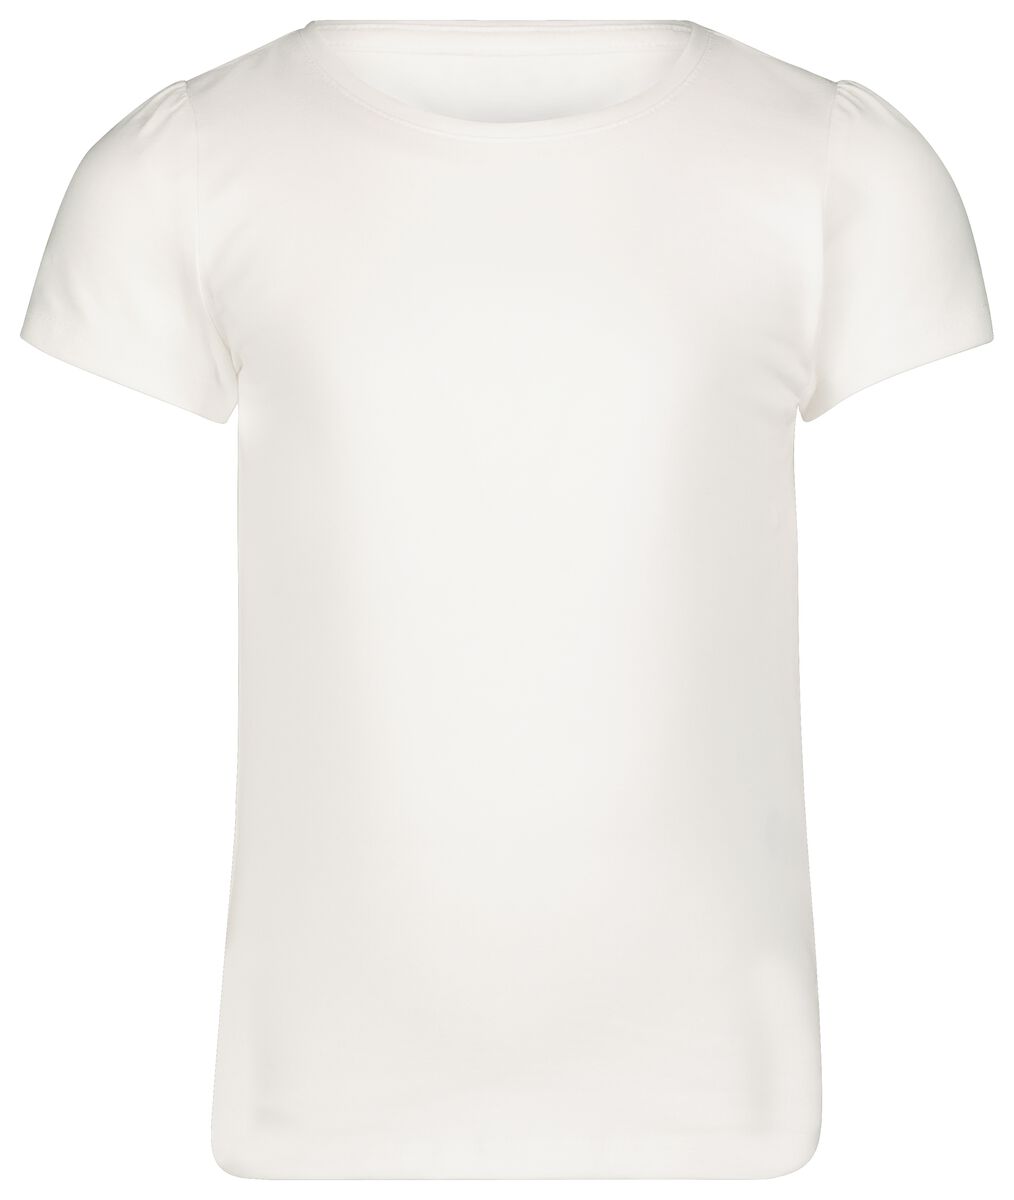 kinder t-shirts - 2 stuks wit - HEMA